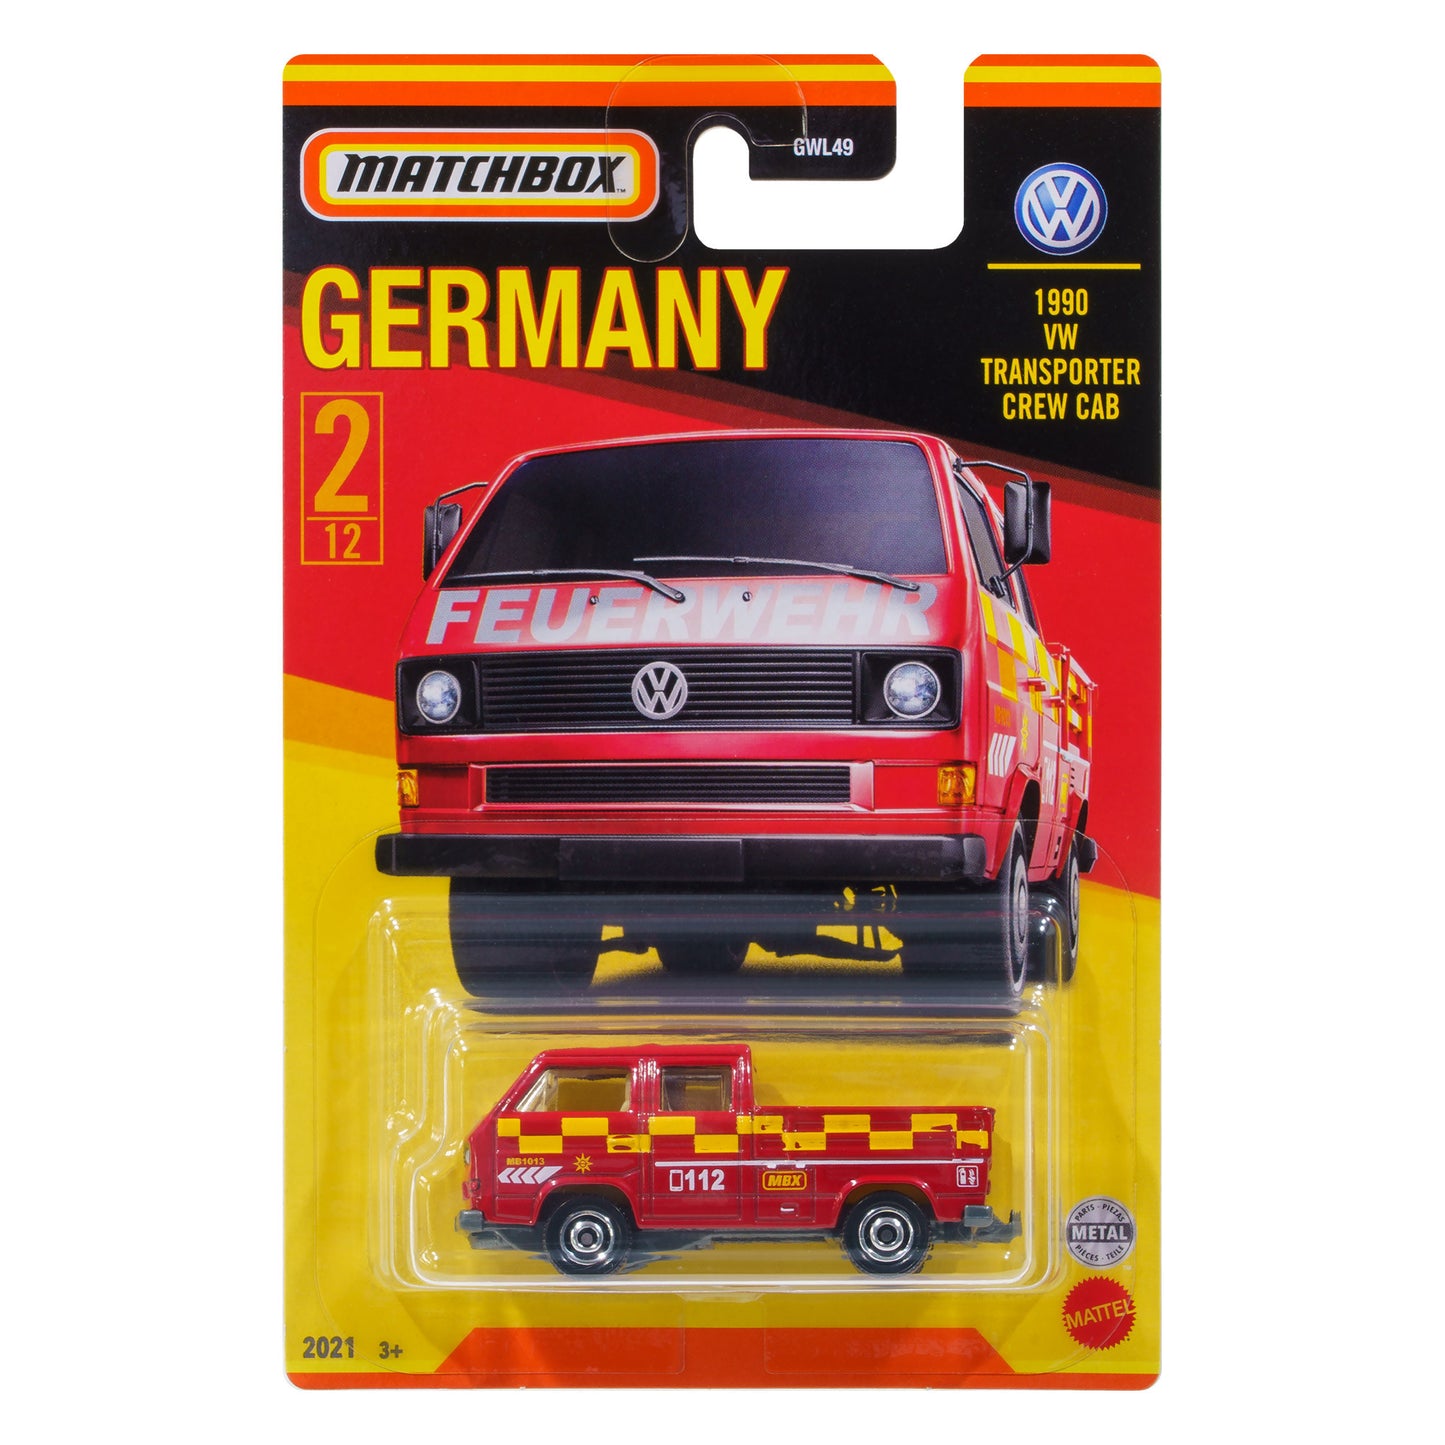 Matchbox | Stars of Germany | 1990 VW Transporter Crew Cab | 2/12 | GWL49 979A